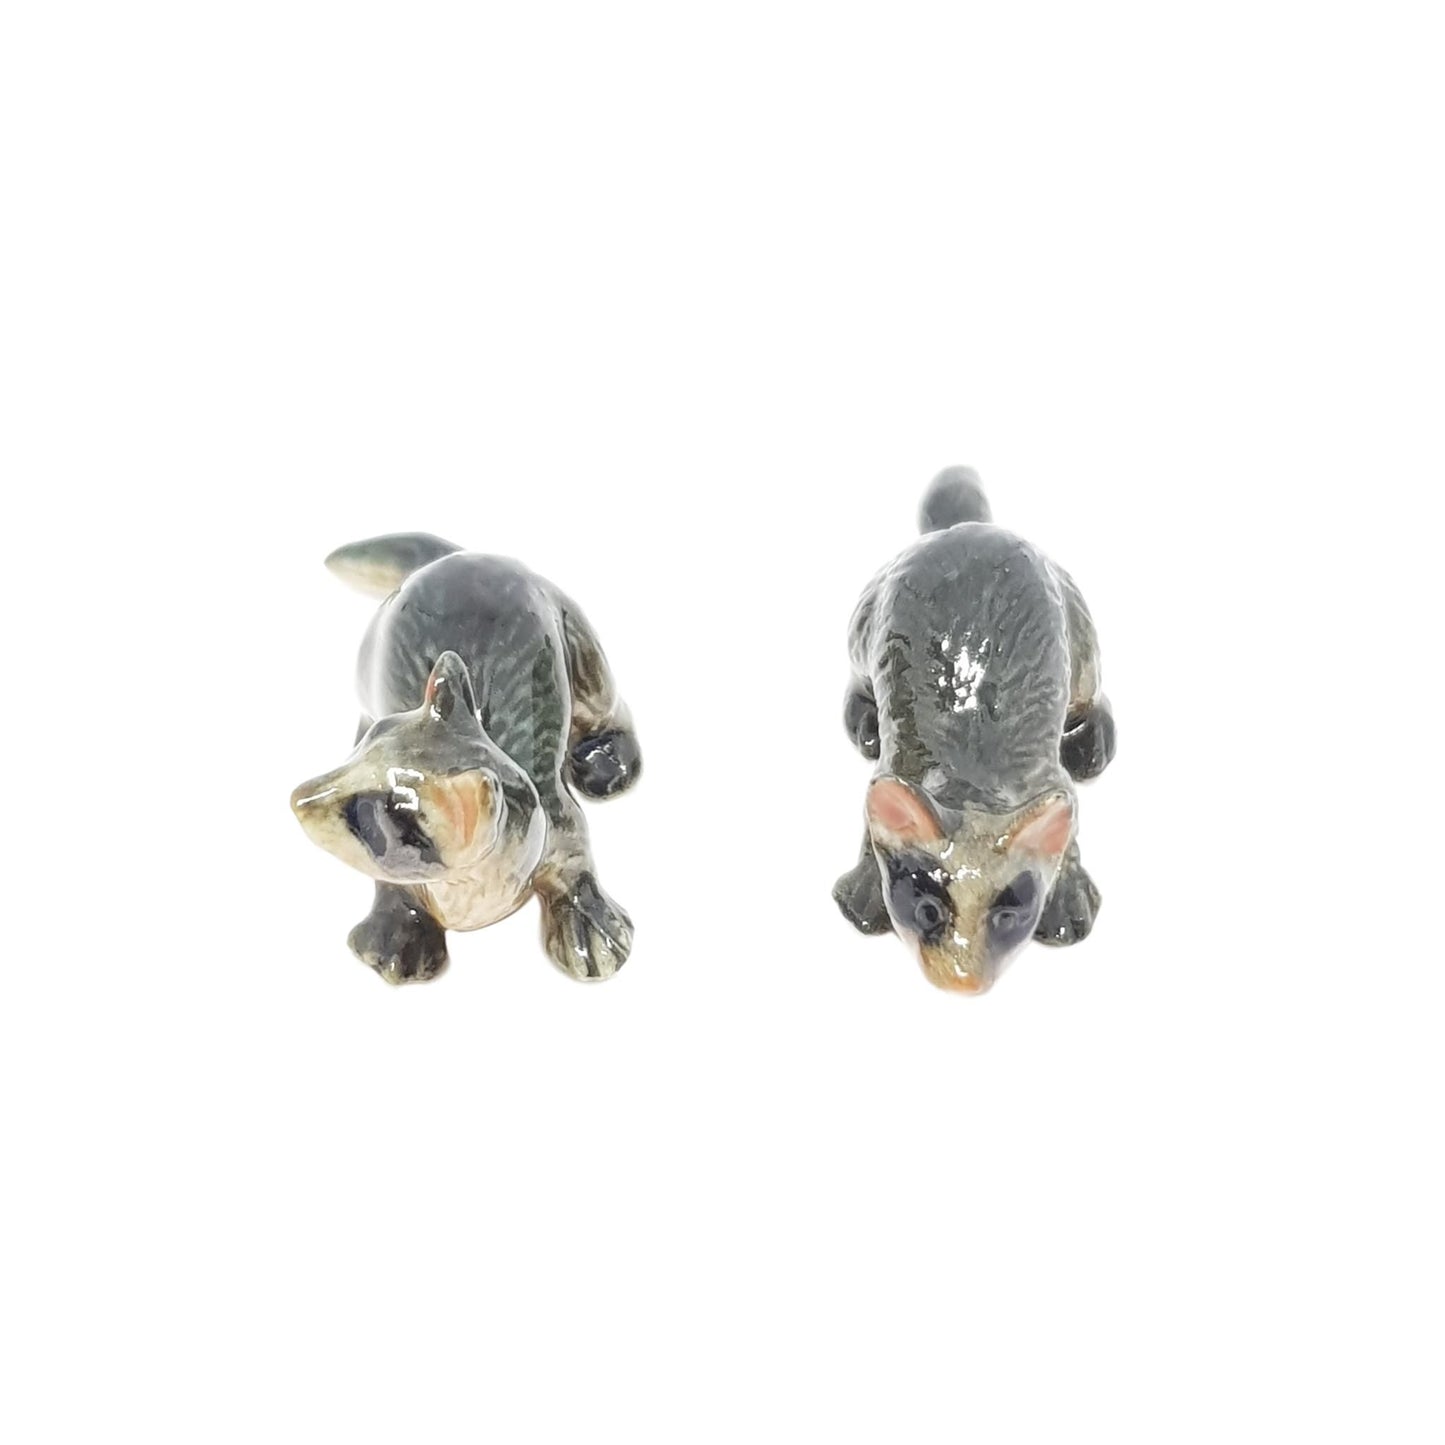 Ferret  set 2 porcelain animal miniature figurine